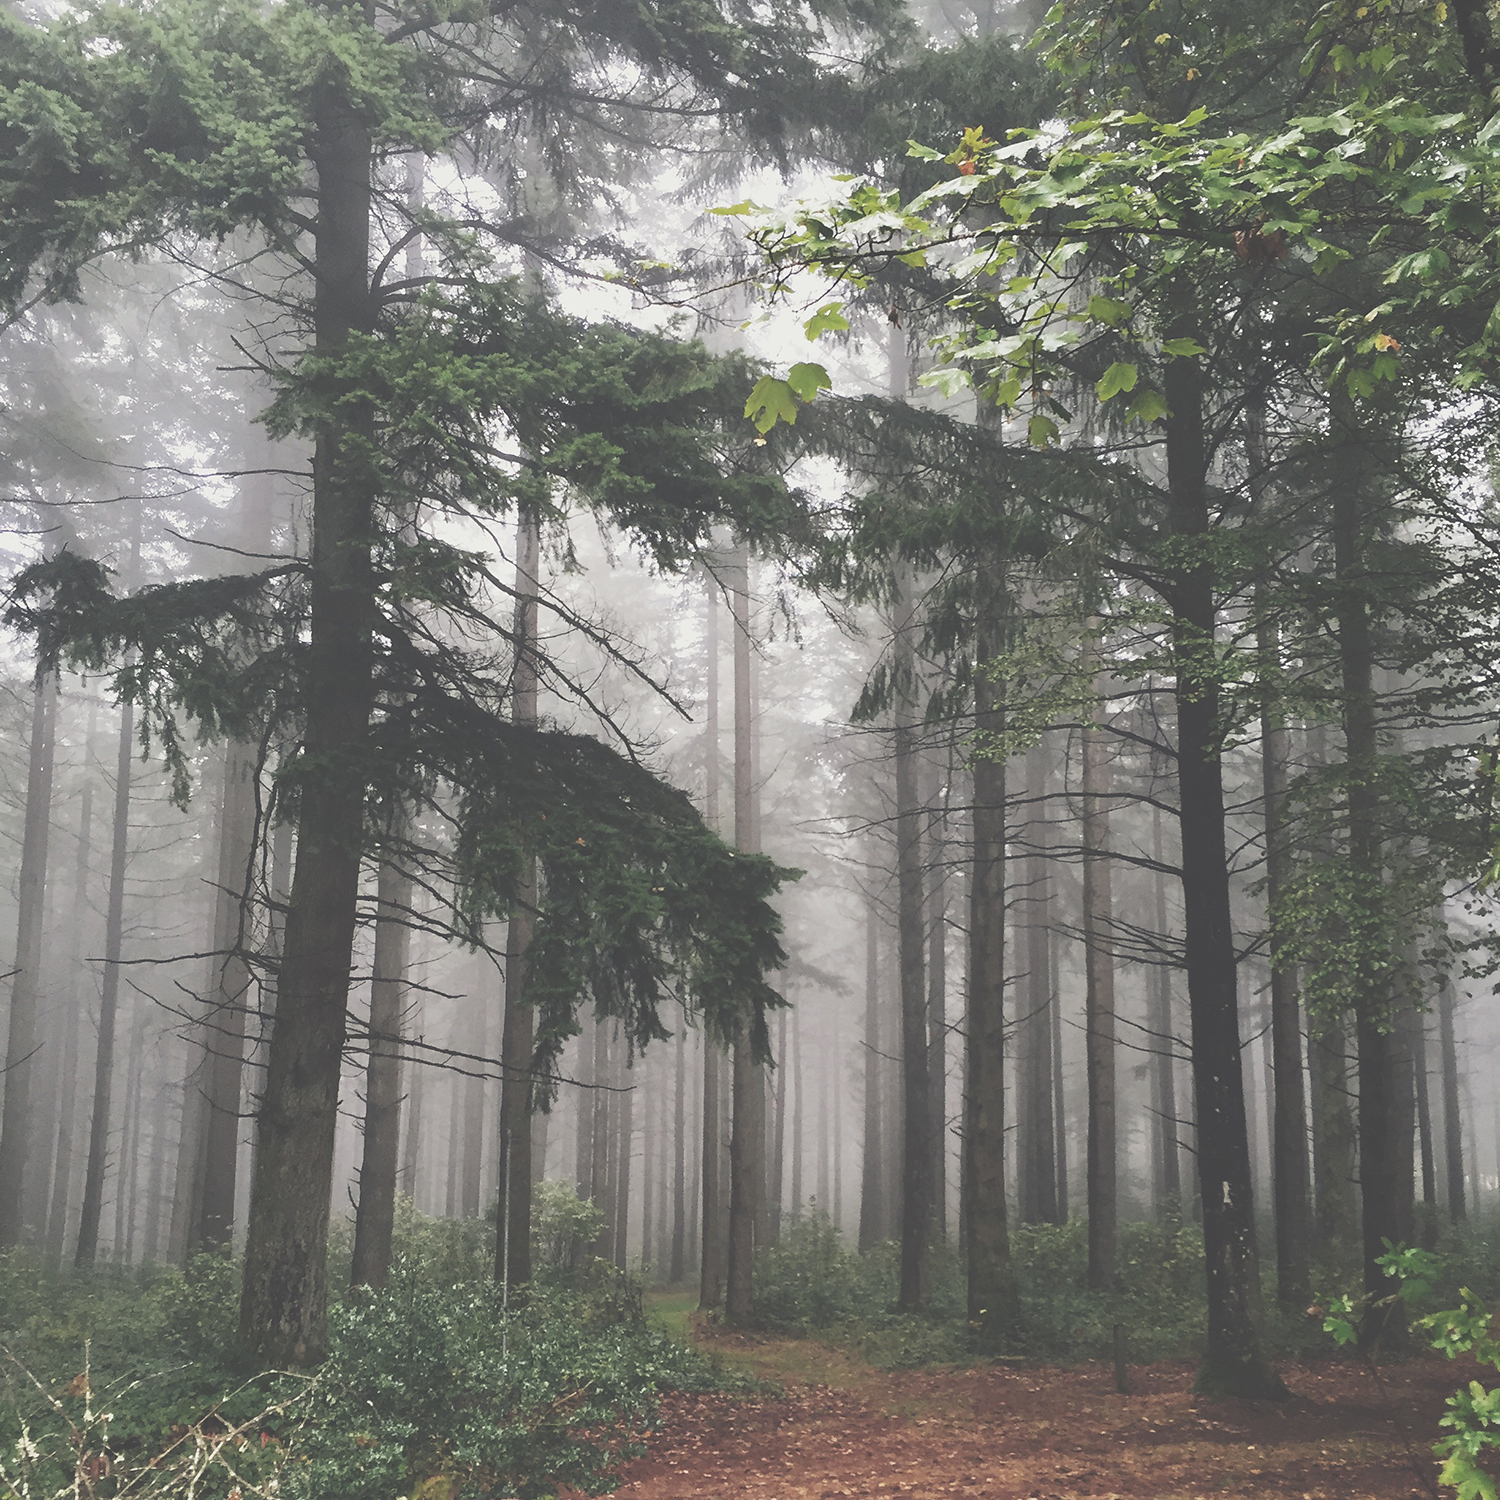 Trees in an atmospheric mist.